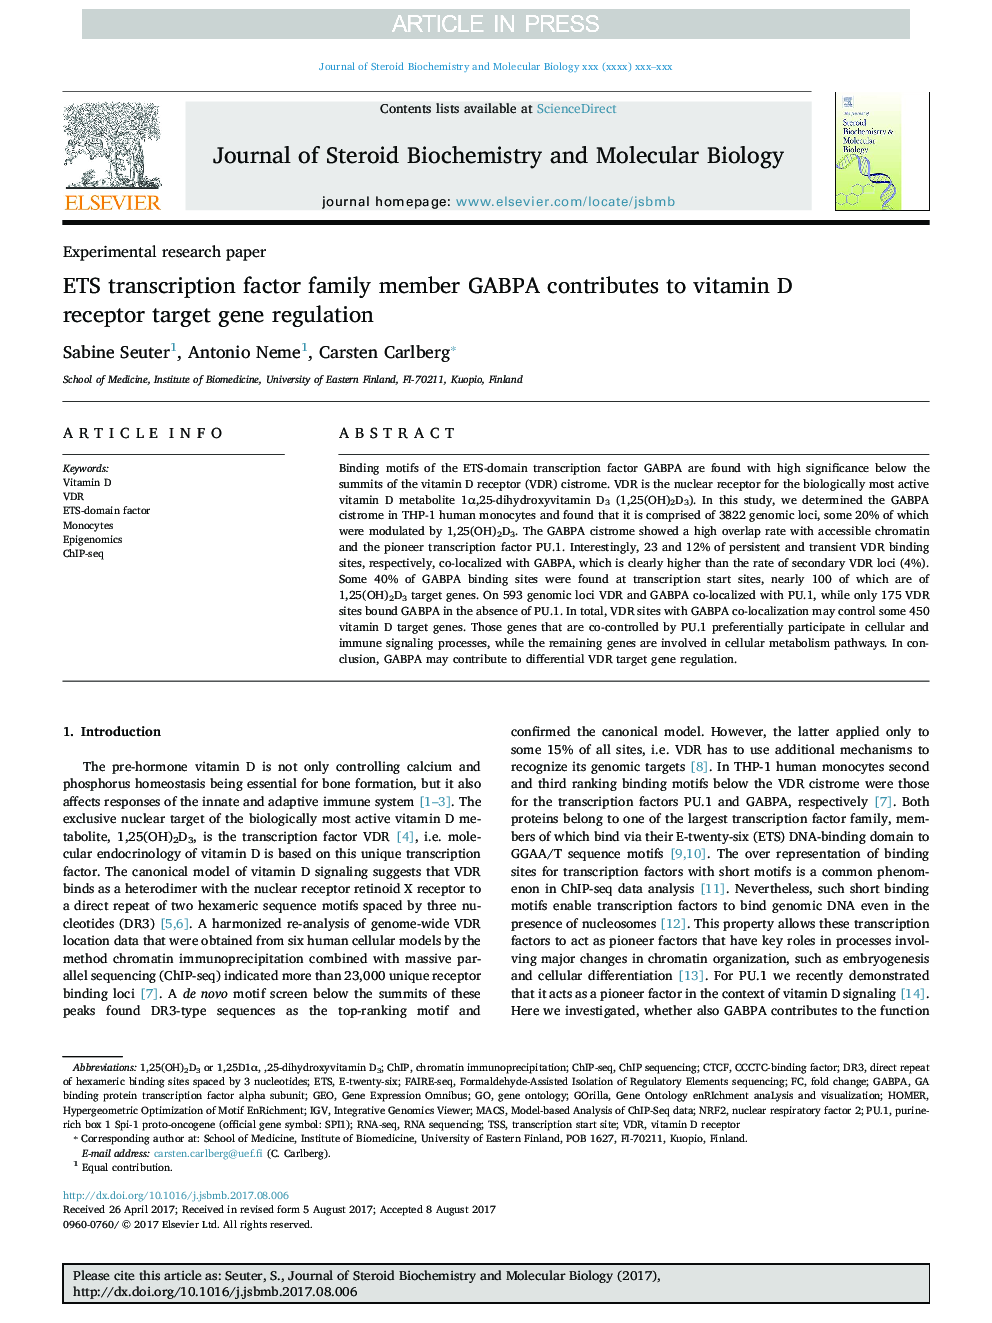 ETS transcription factor family member GABPA contributes to vitamin D receptor target gene regulation